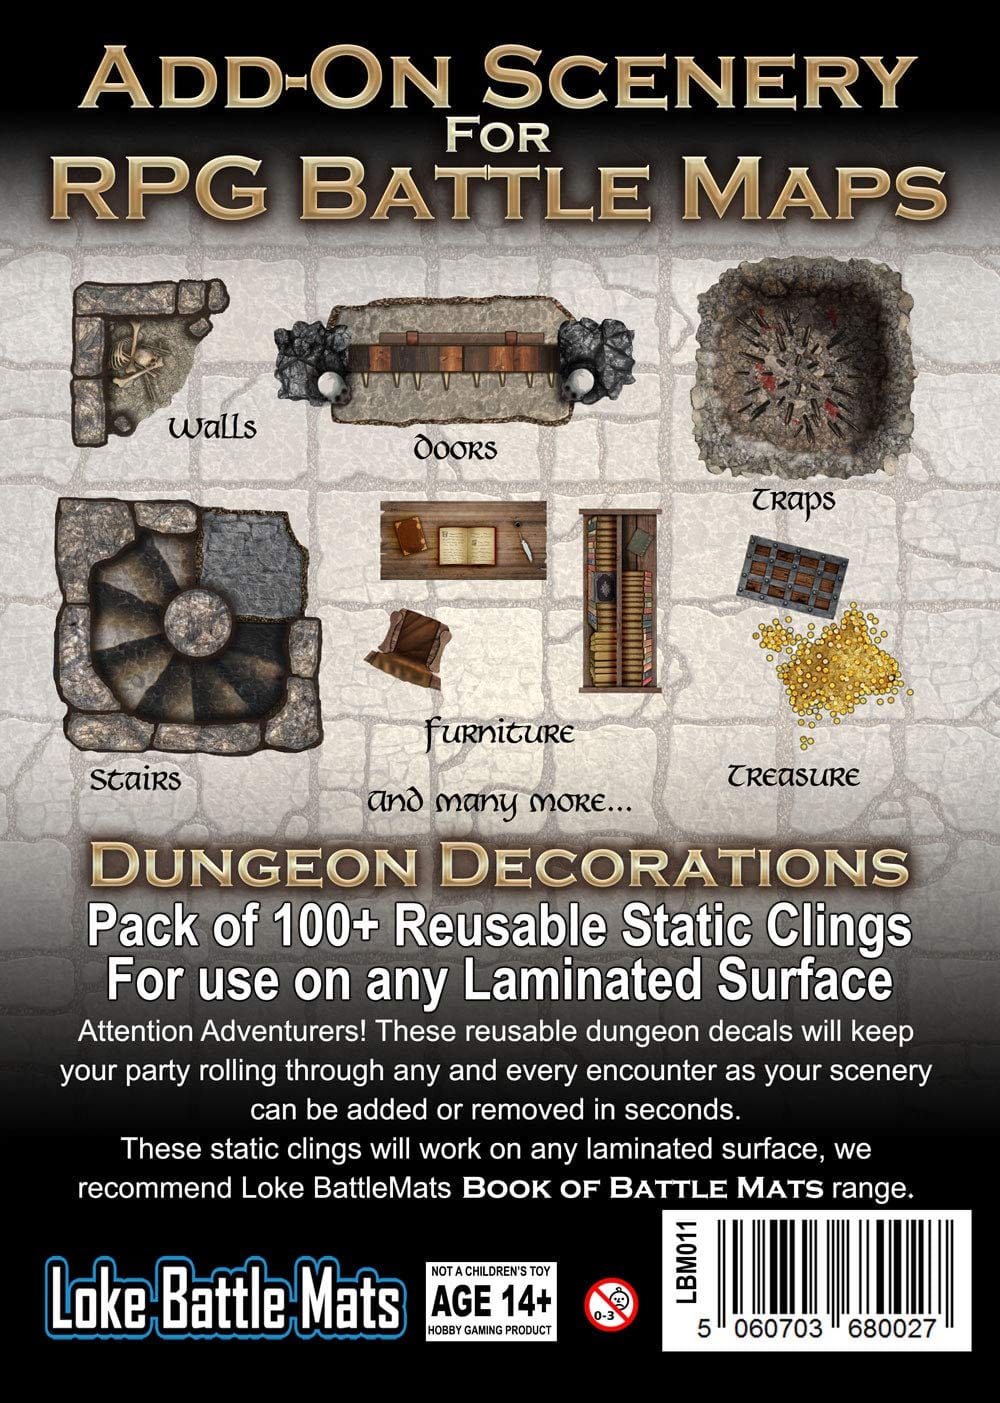 Loke Battle Mats Accessories Battle Mats: Add-On Scenery for RPG Battle Maps - Dungeon Decorations